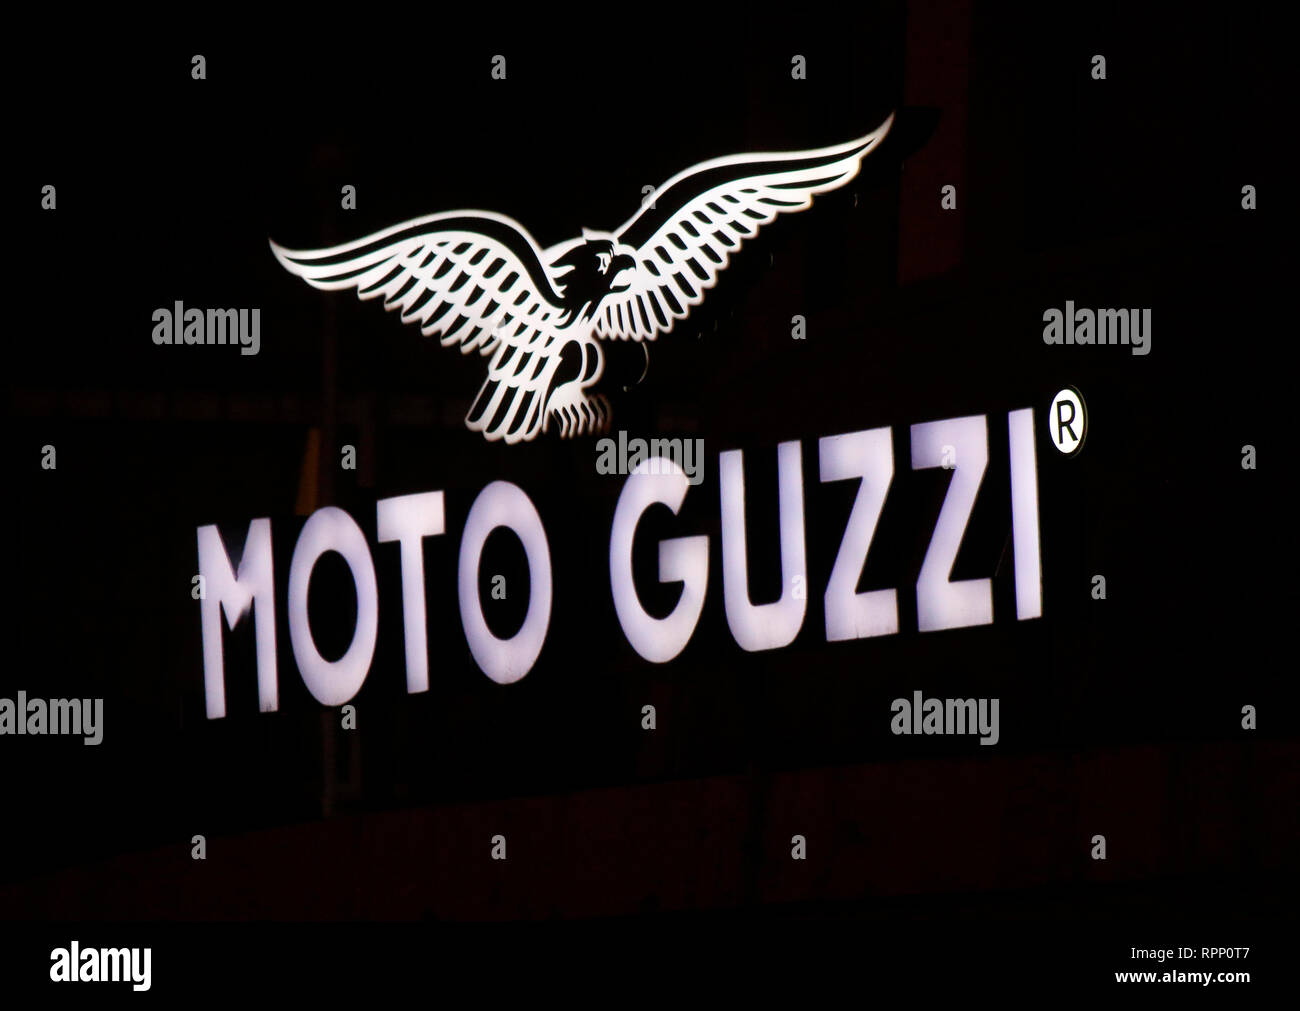 Moto guzzi logo hi-res stock photography and images - Alamy